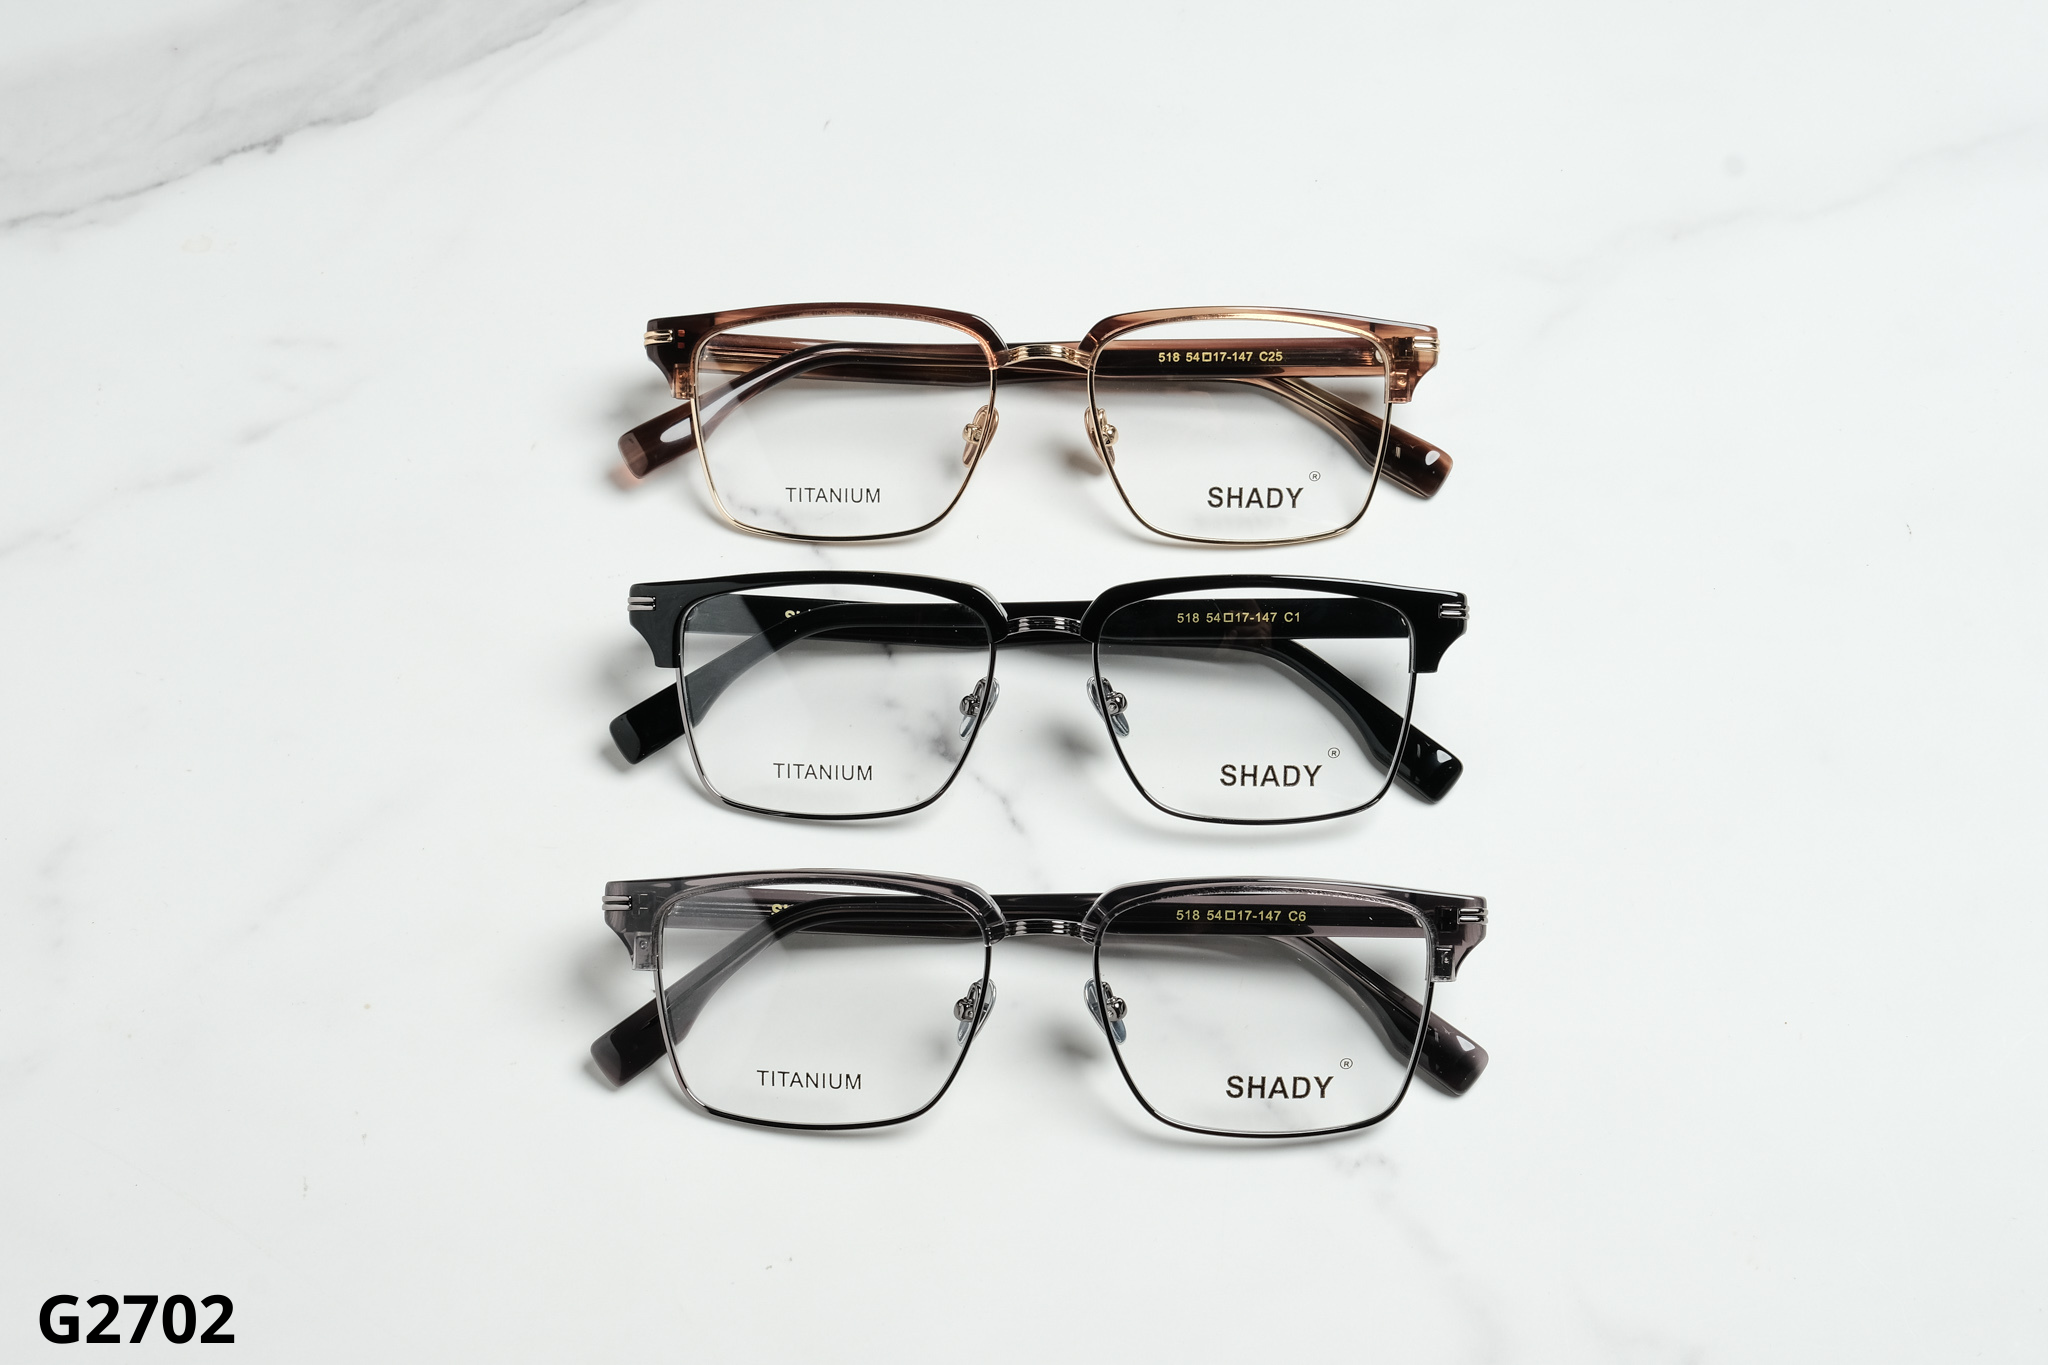  SHADY Eyewear - Glasses - G2702 